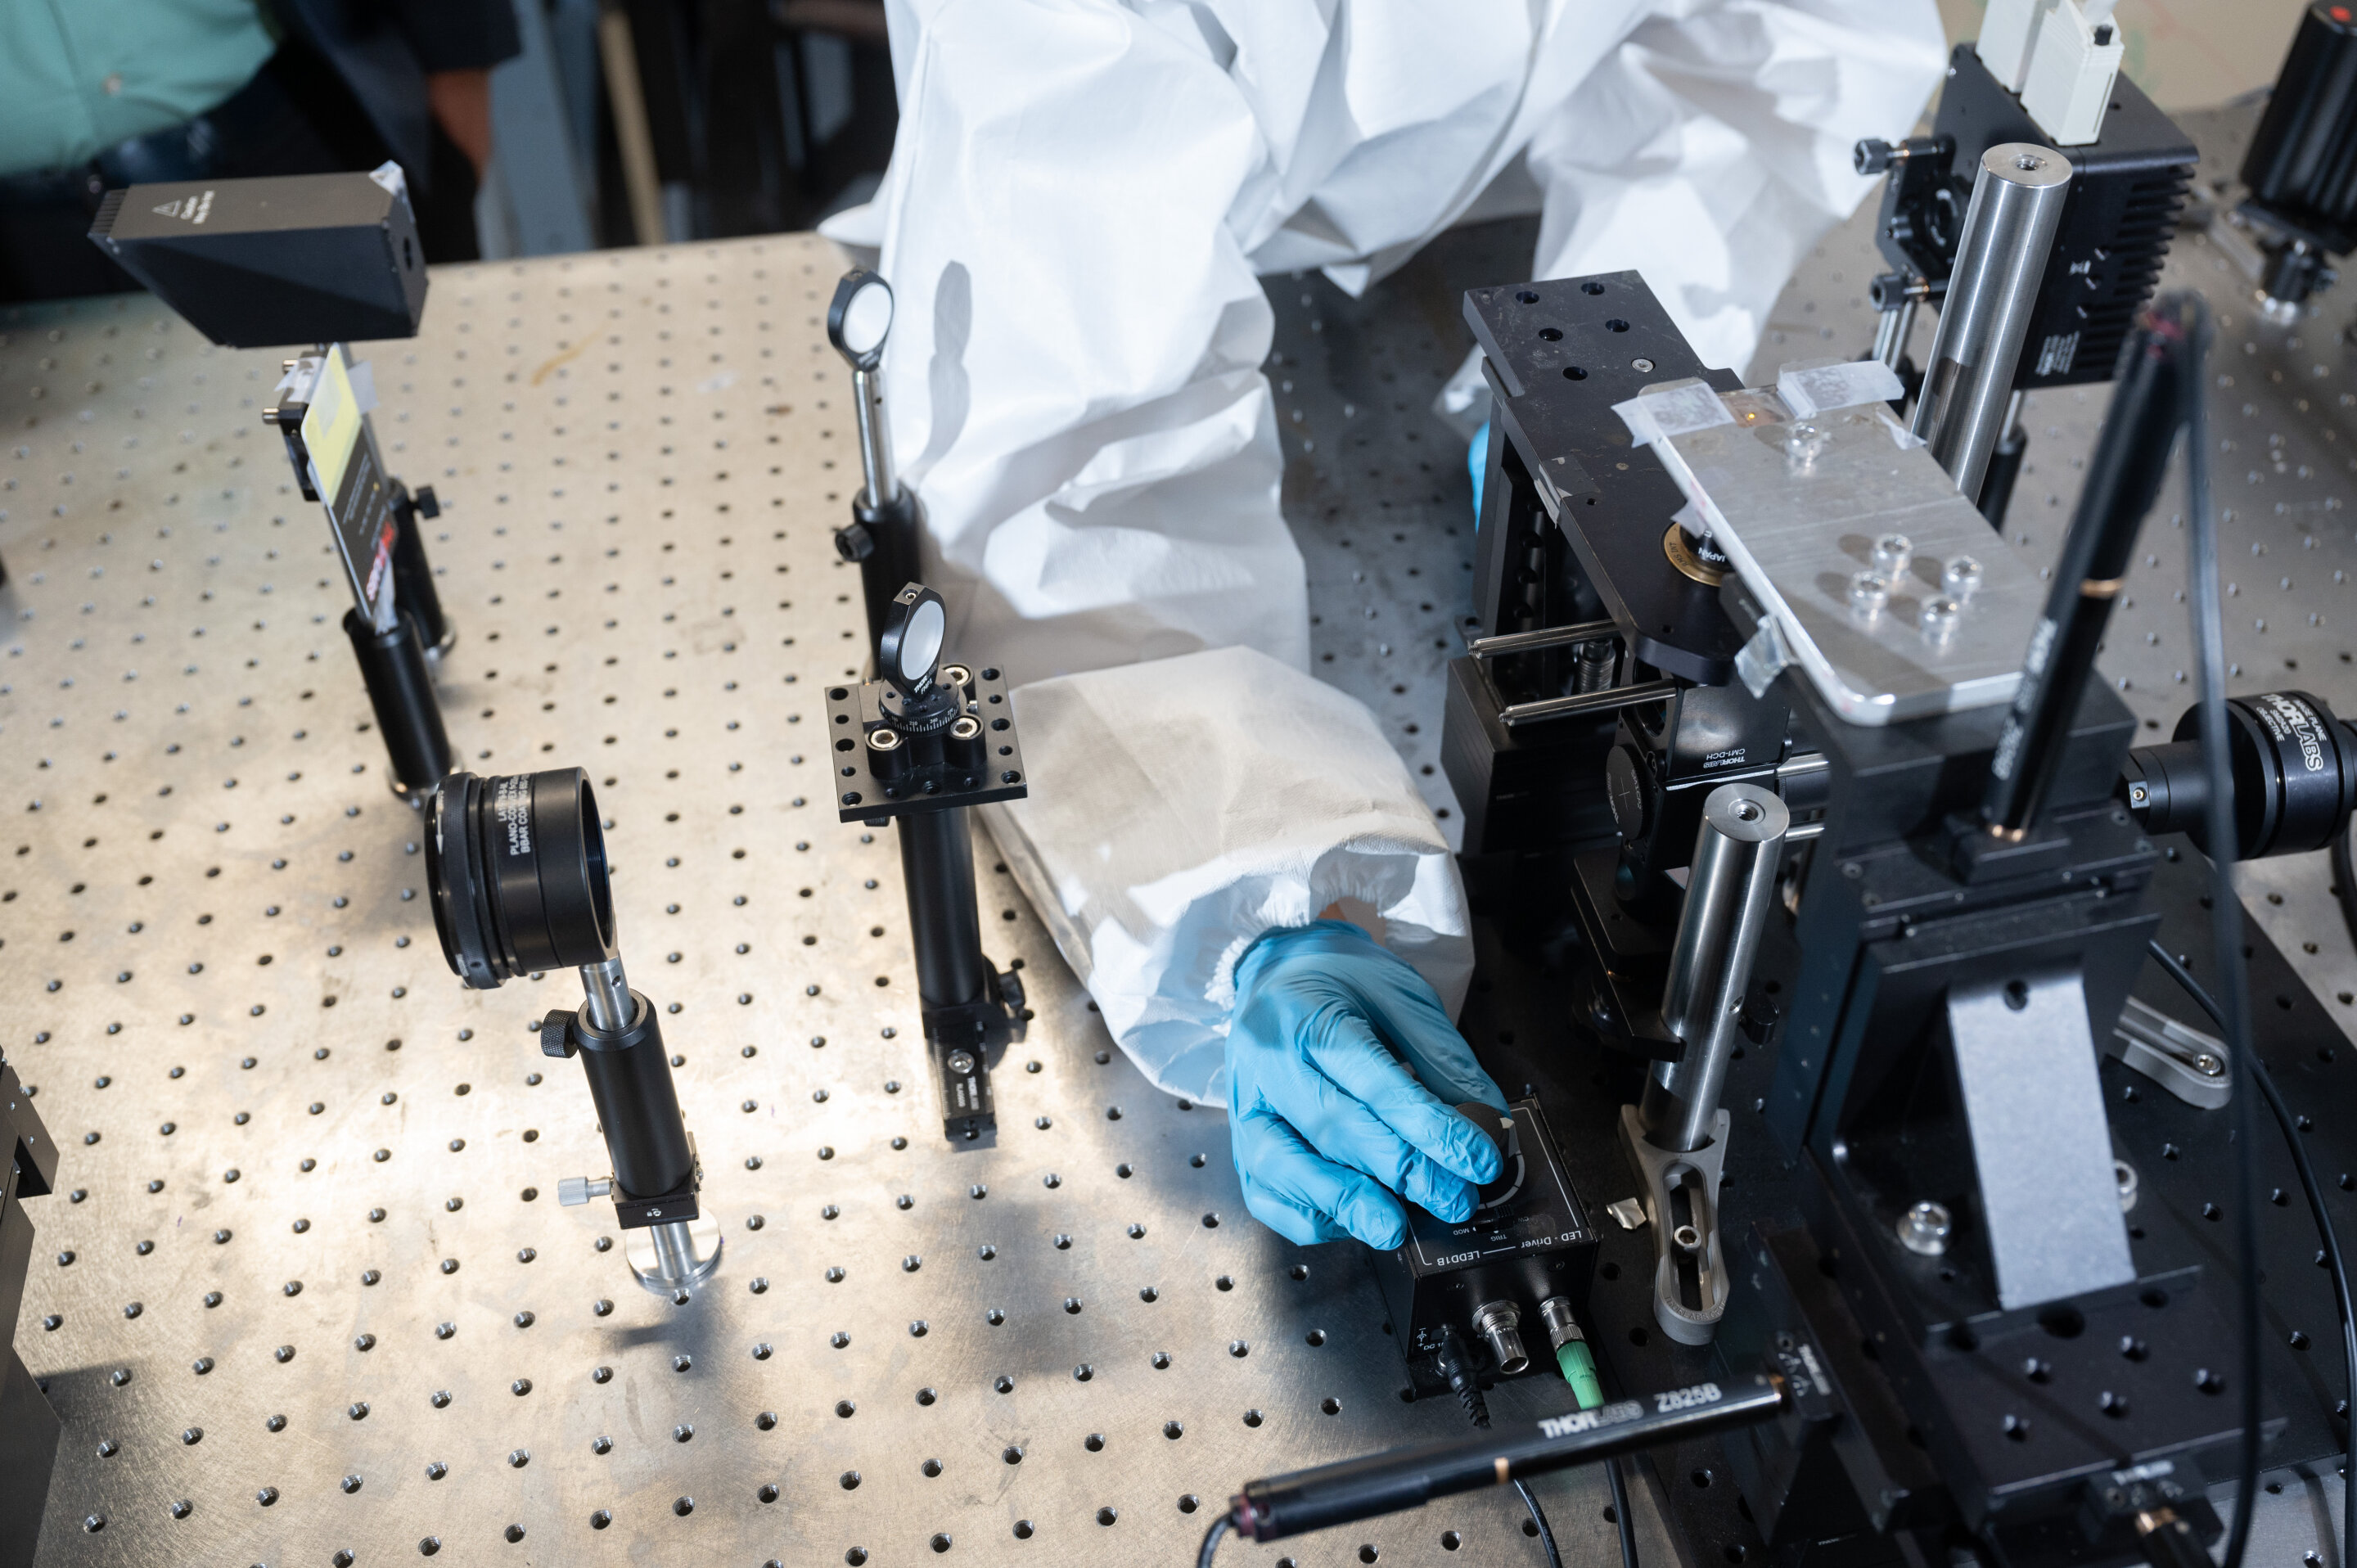 Super material: Scientists make stretchy high-tech fibre stronger